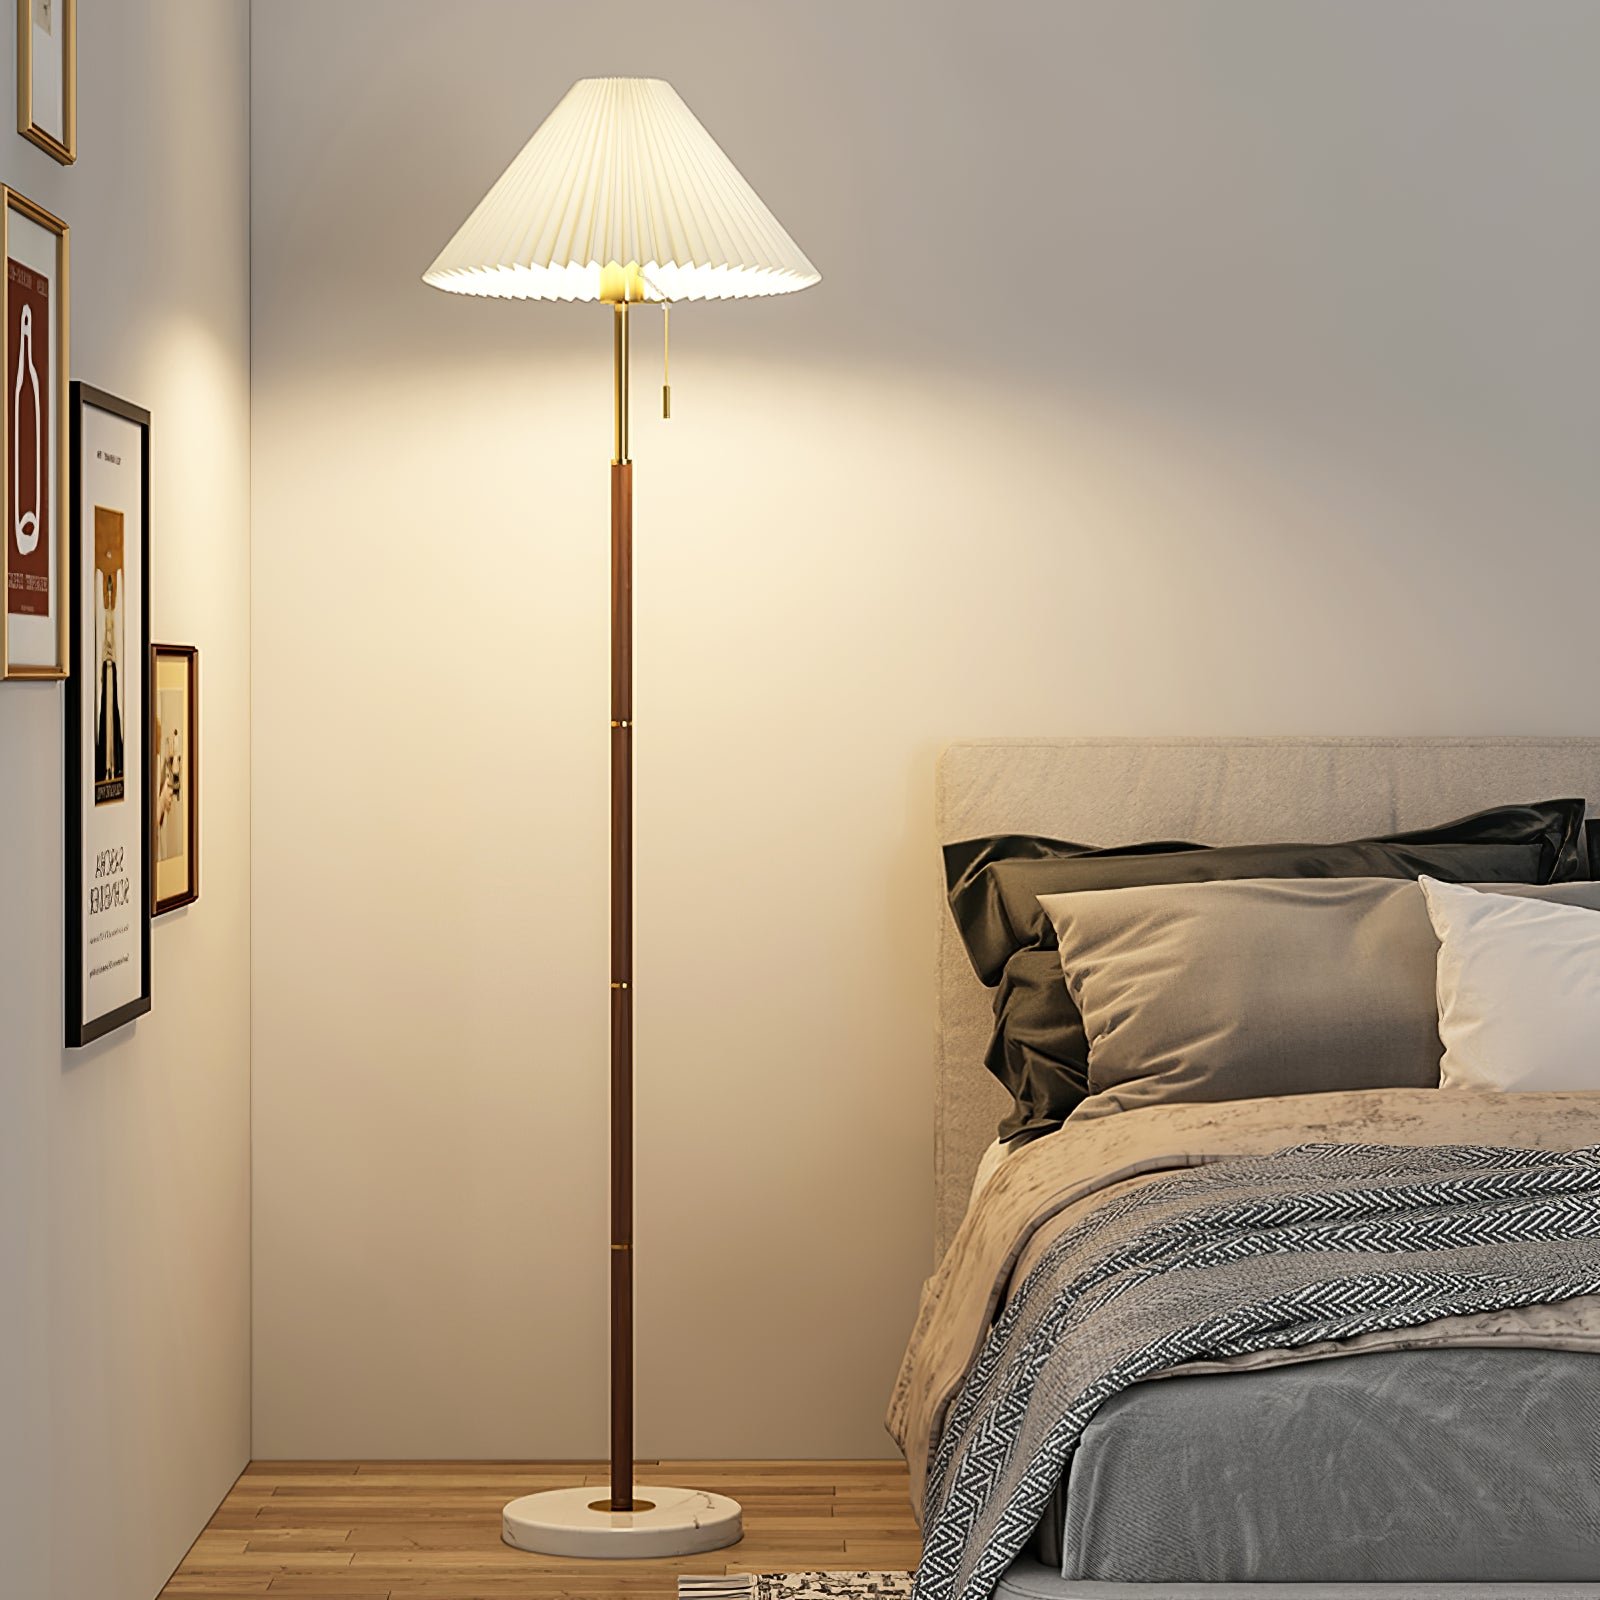 Floor Lamp - Vintage Pleated Design, 11" Diameter x 66" Height (28cm x 168cm), Walnut/White Finish, UK Plug